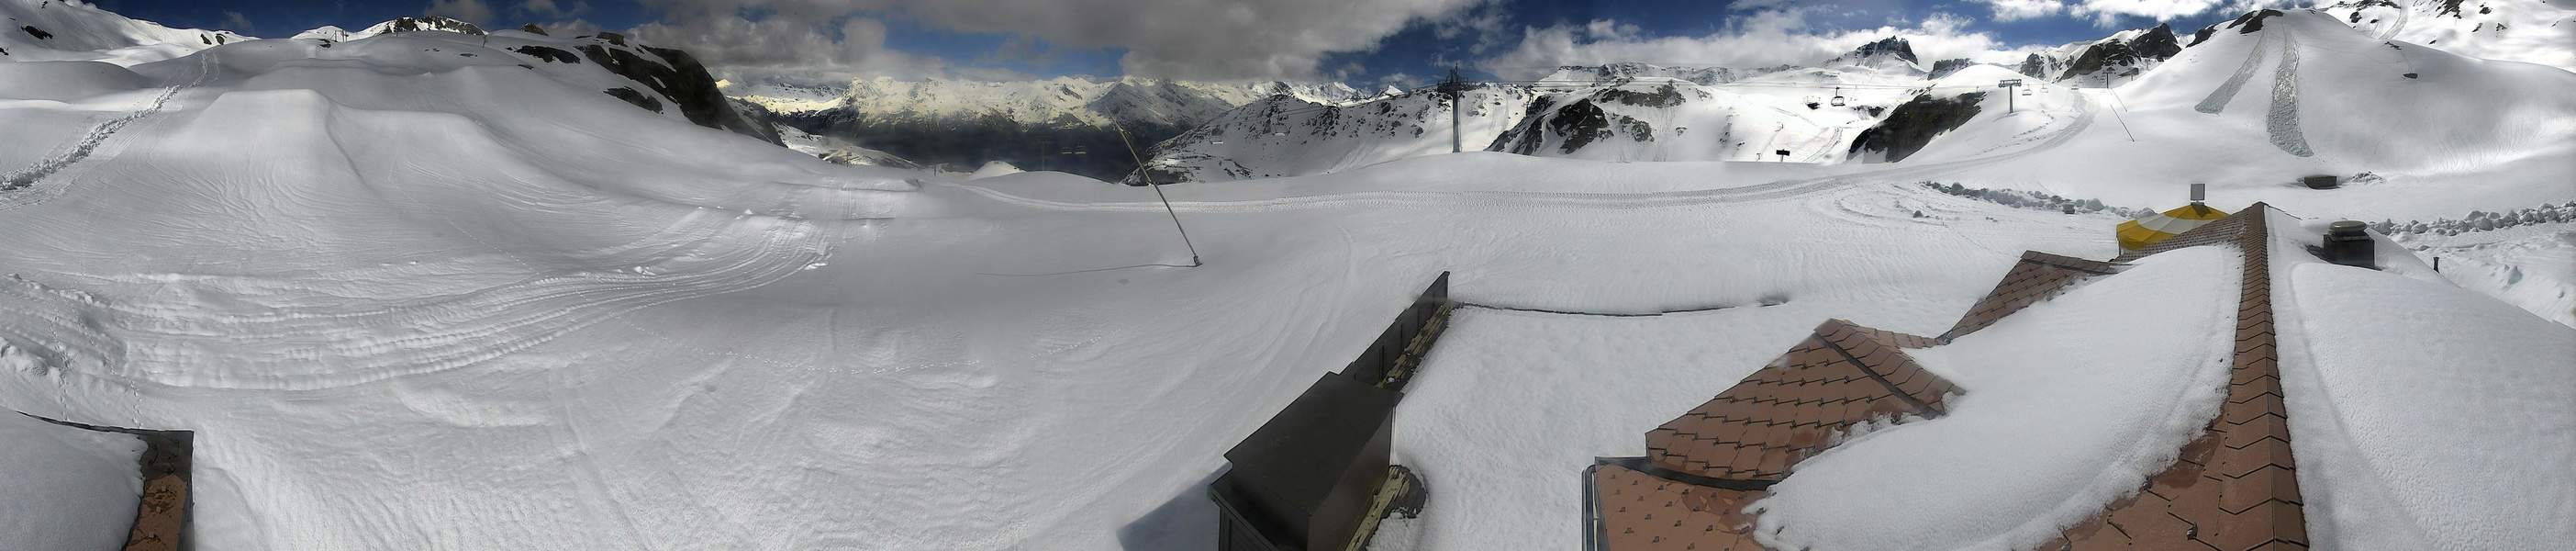 Grimentz webcam - Orzival snowpark 2.600 m